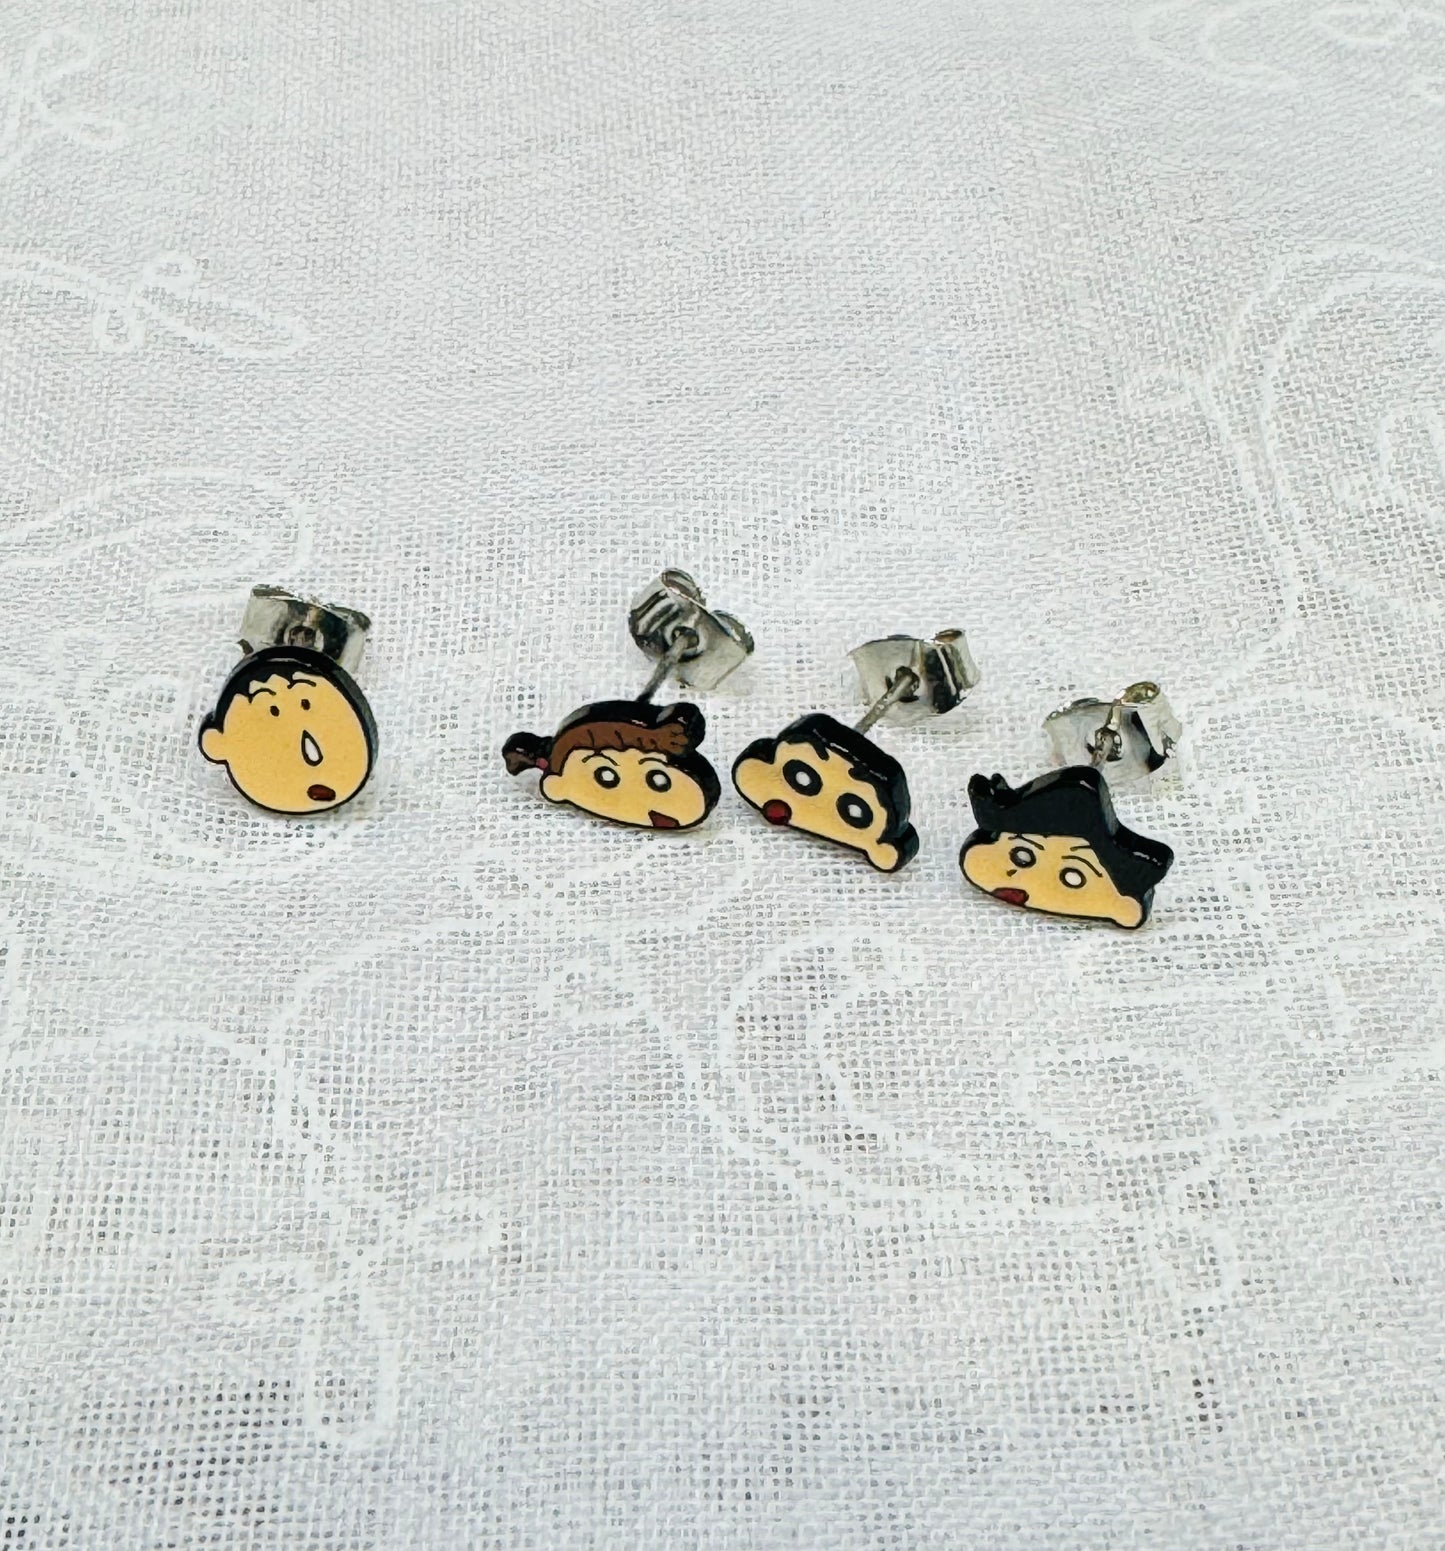 Set of 4 Cartoon characters earrings, Kureyon Shin Chan and friends Stud earrings